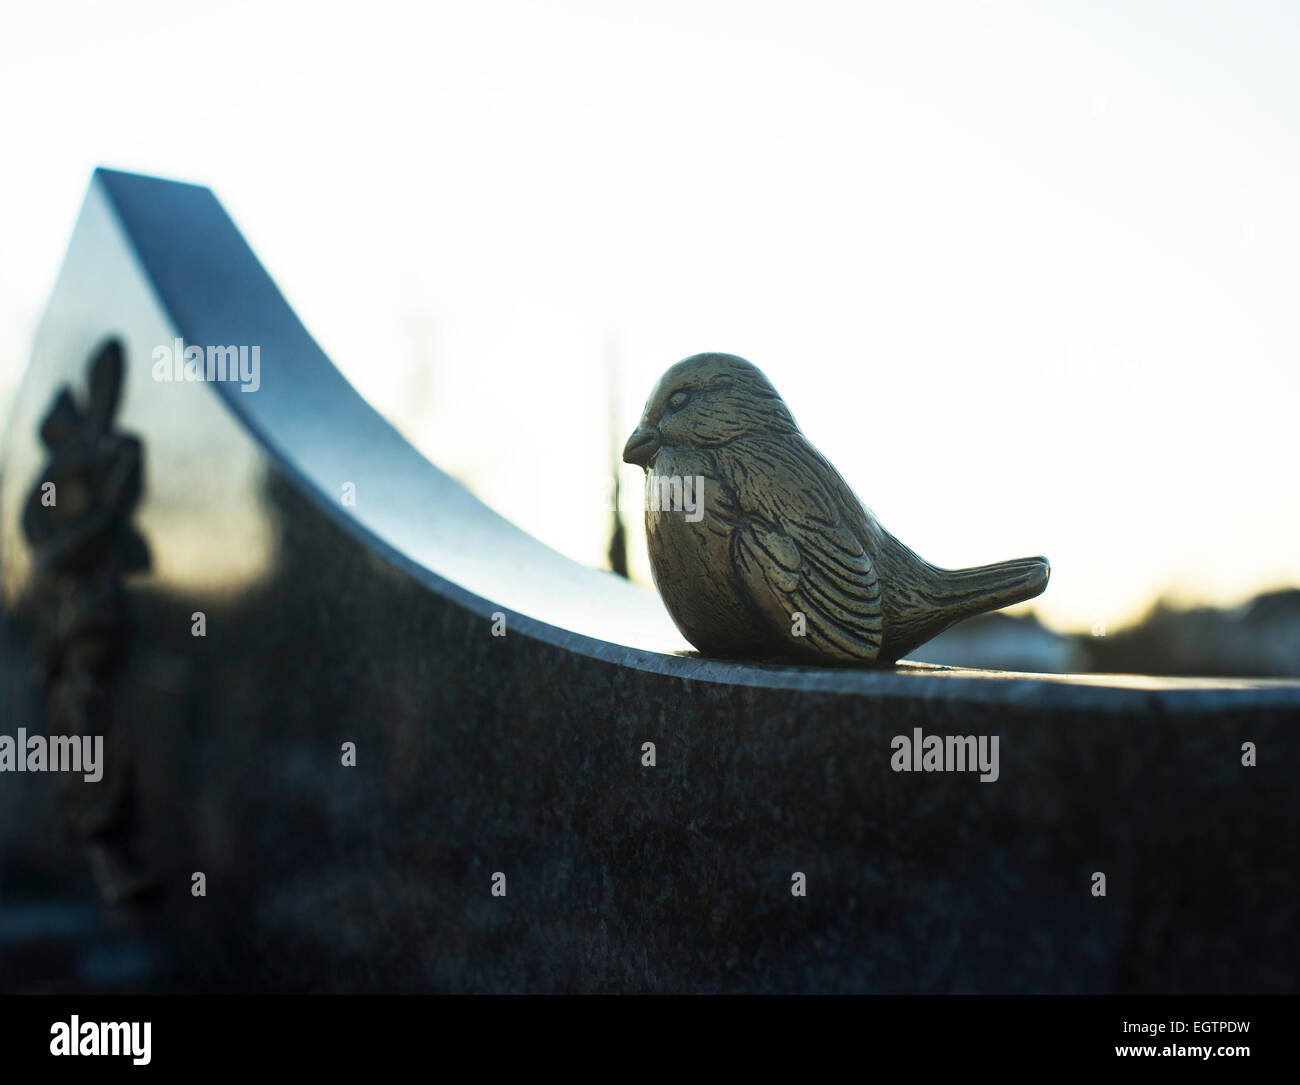 Sculpture bird, sitting on a gravestone. Stock Photo